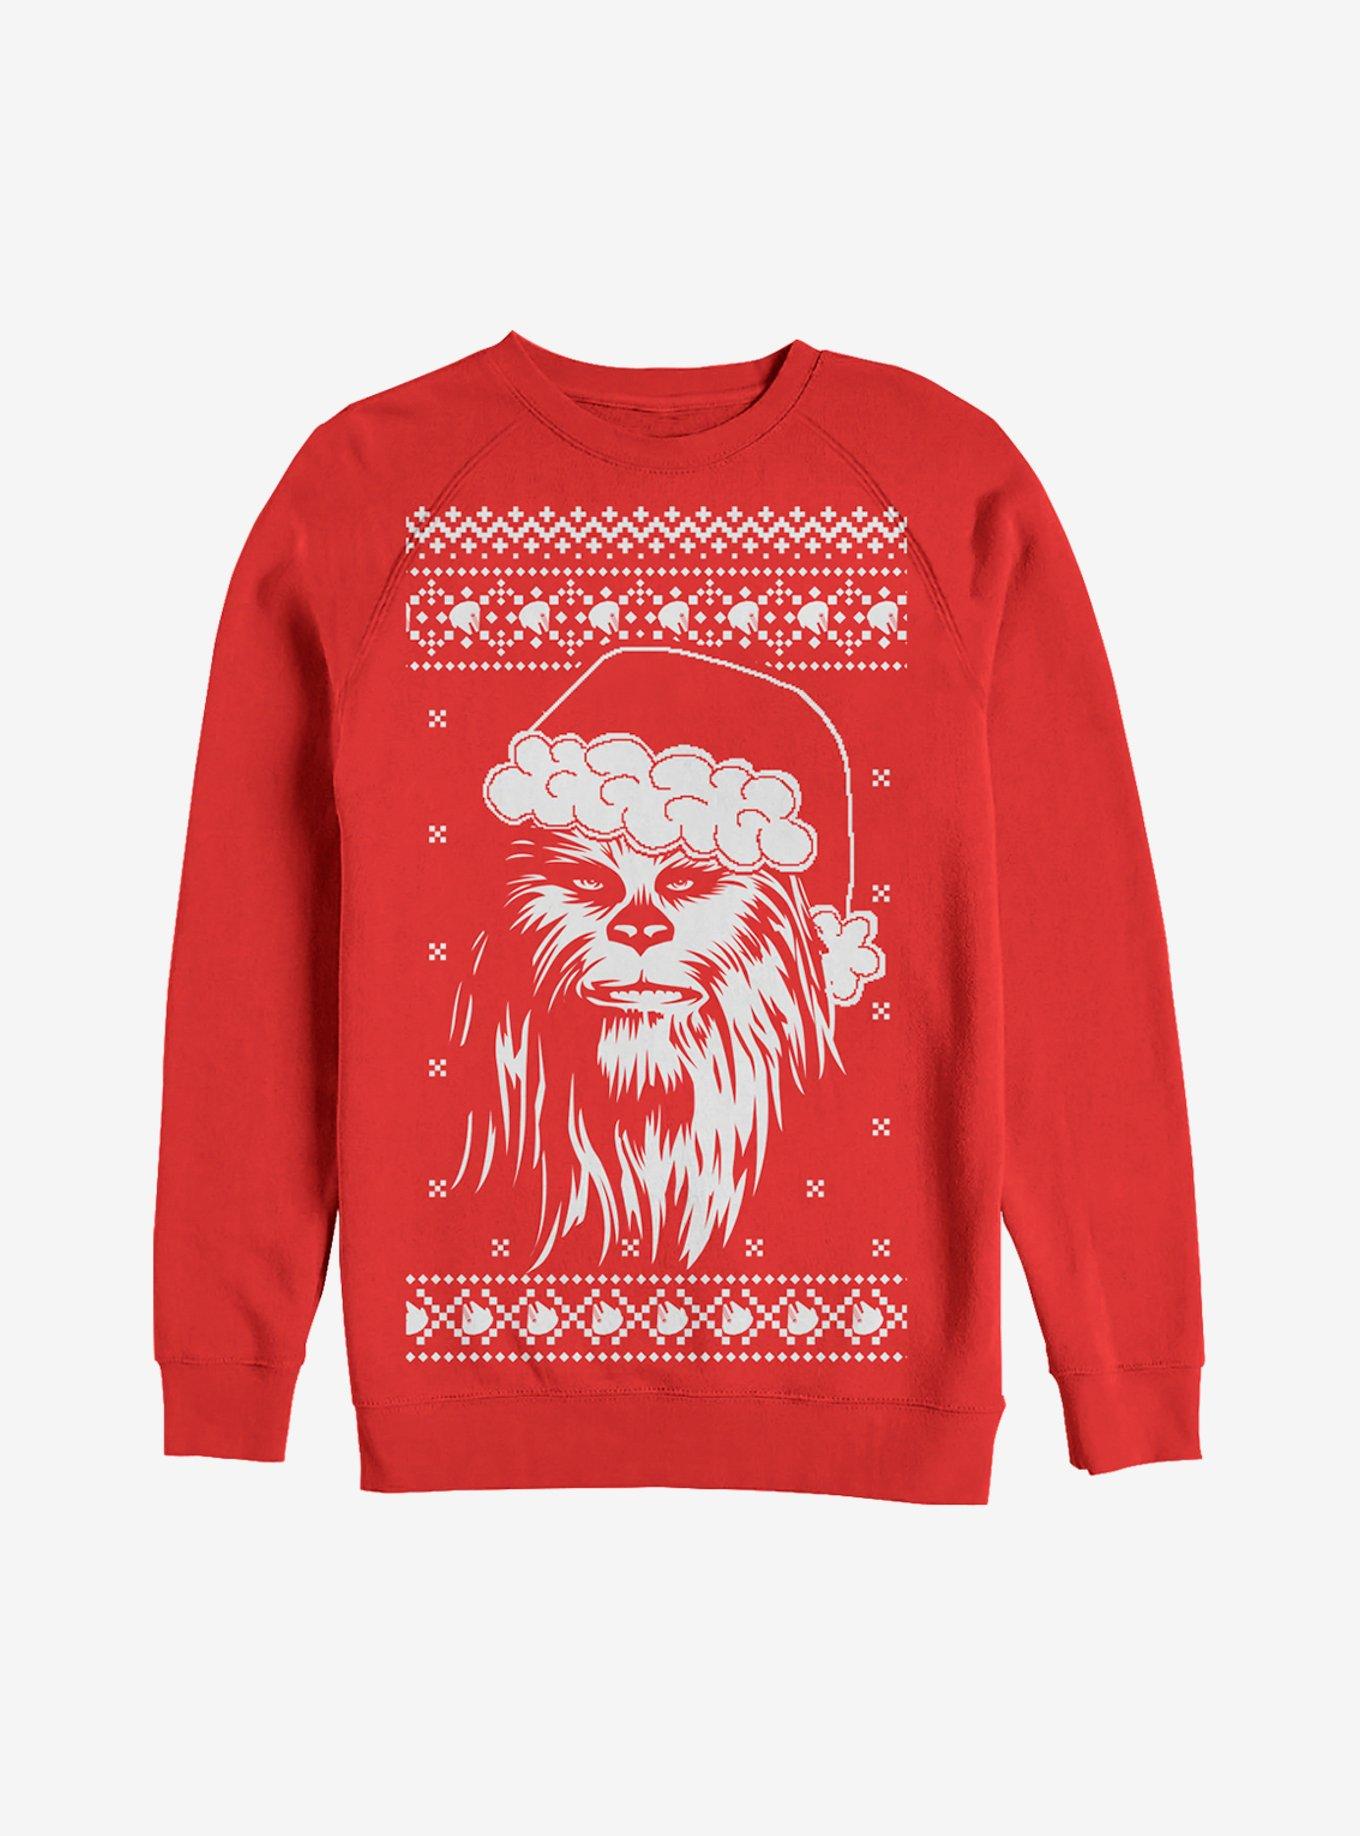 Star Wars Ugly Christmas Sweater Chewbacca Santa Sweatshirt, RED, hi-res